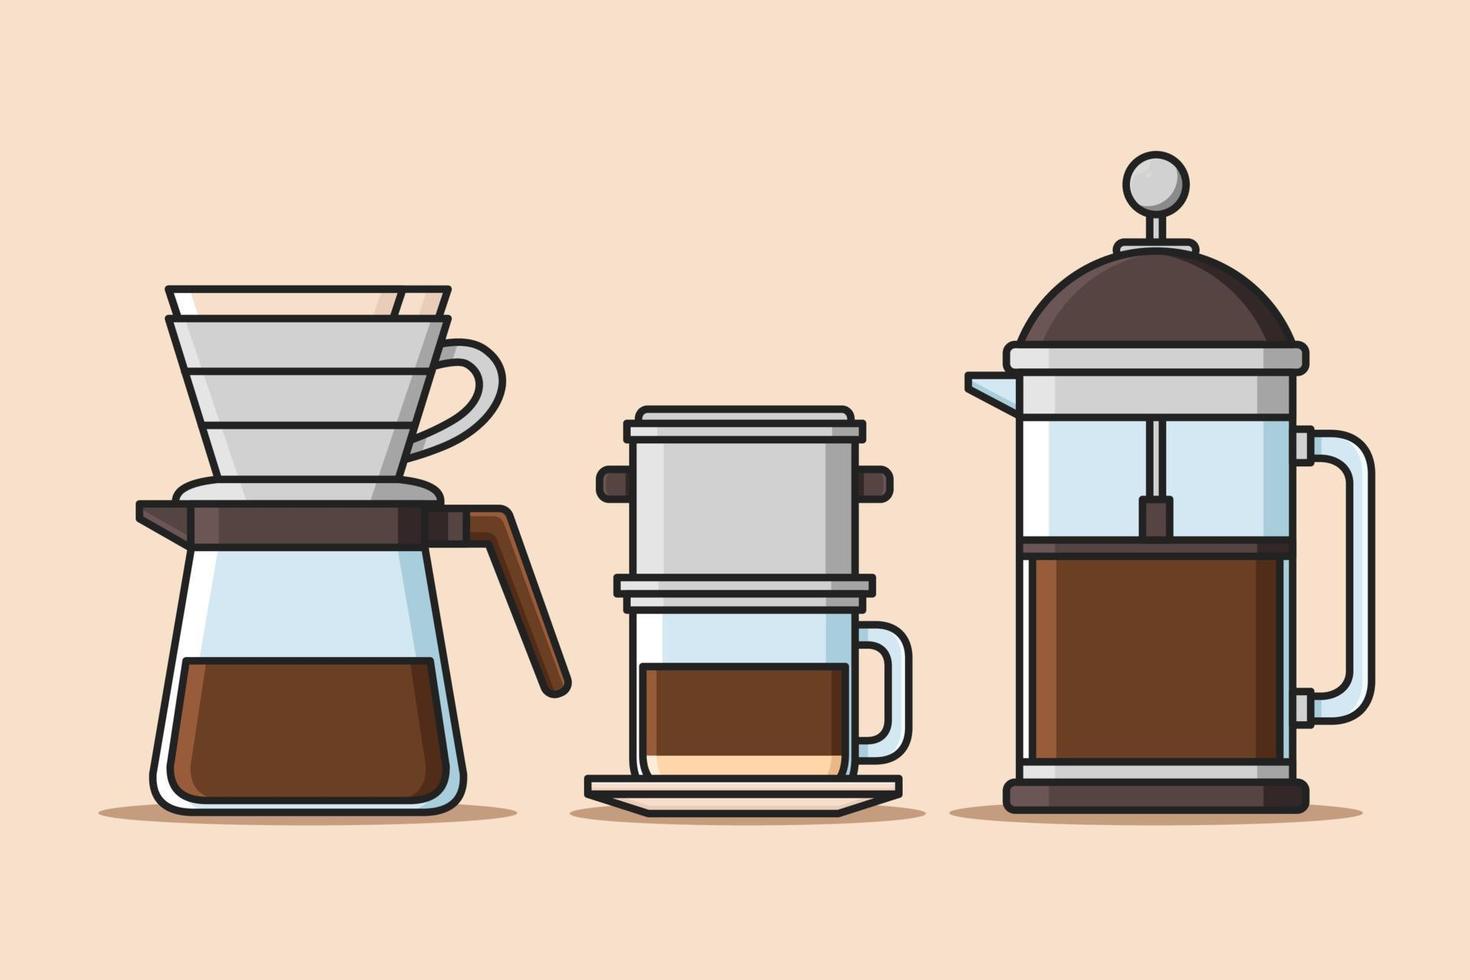 método de preparo de café com diferentes dispositivos vetor